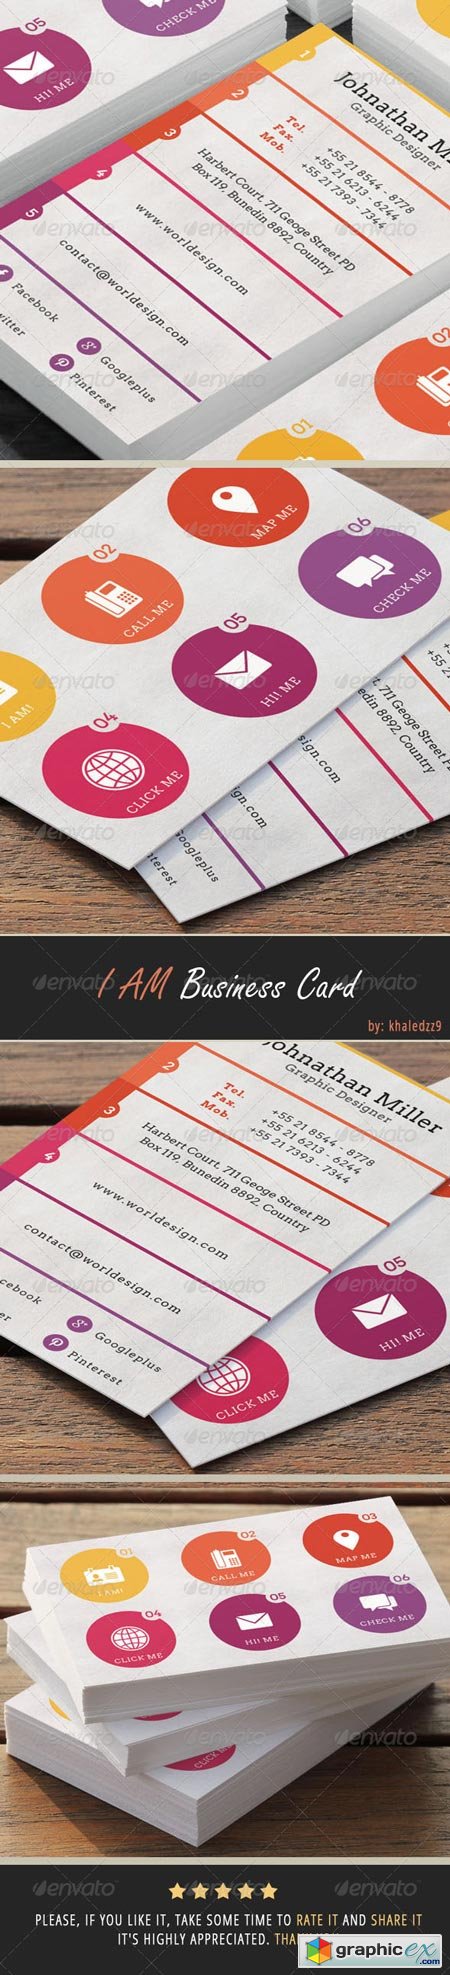 I AM Business Card 6940262